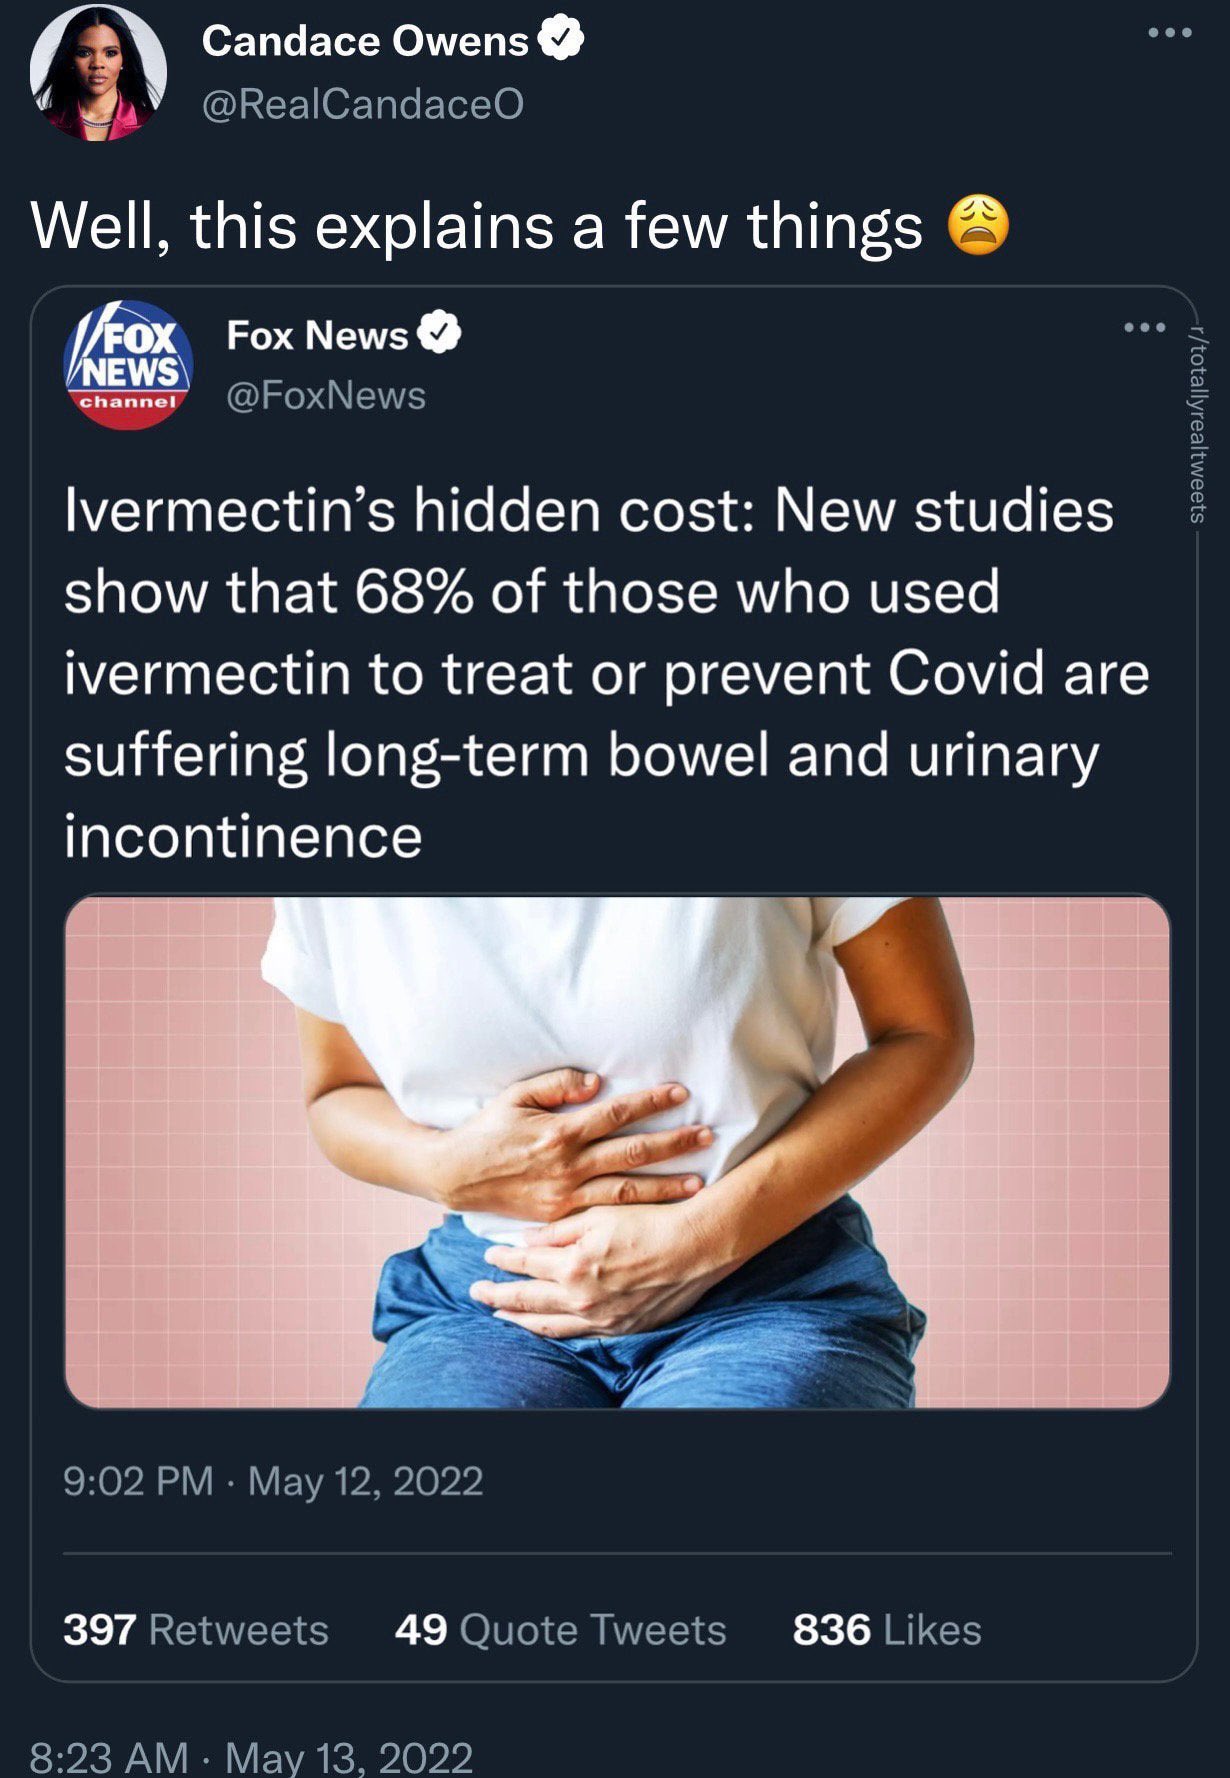 Candace Owens no respondió a un tuit de Fox News sobre los costos ocultos de la ivermectina.